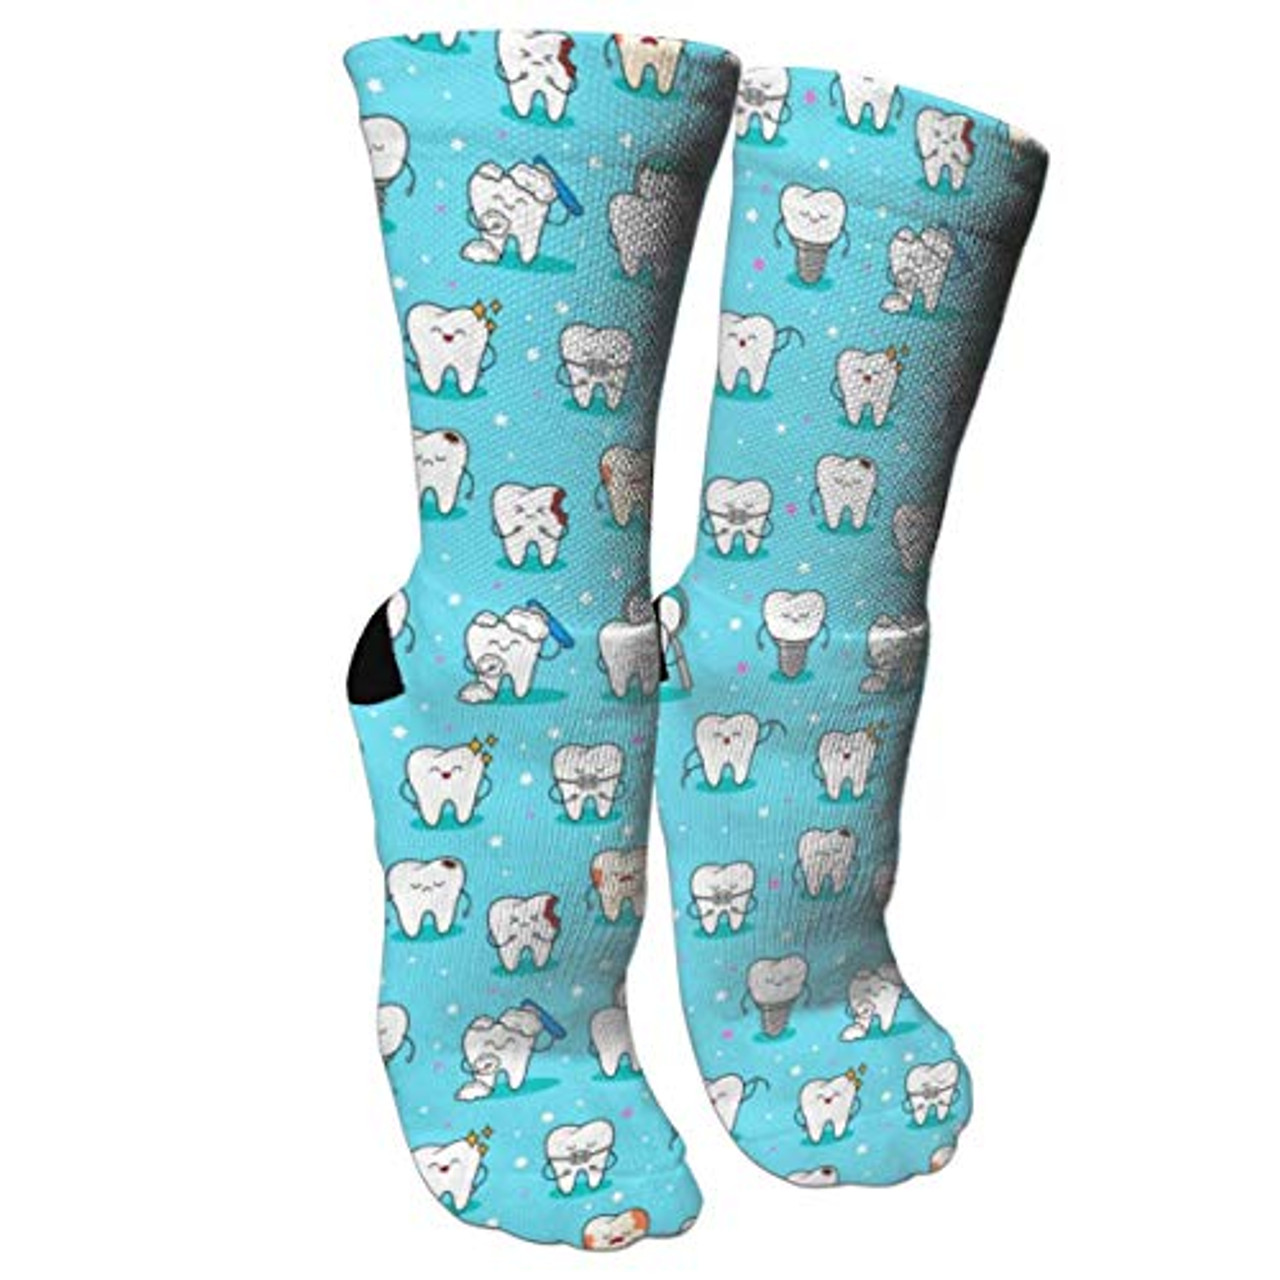 antspuent Australian Shepherd Compression Socks Unisex Printed Socks Crazy Patterned Fun Long Cotton Socks Over The Calf Tube 